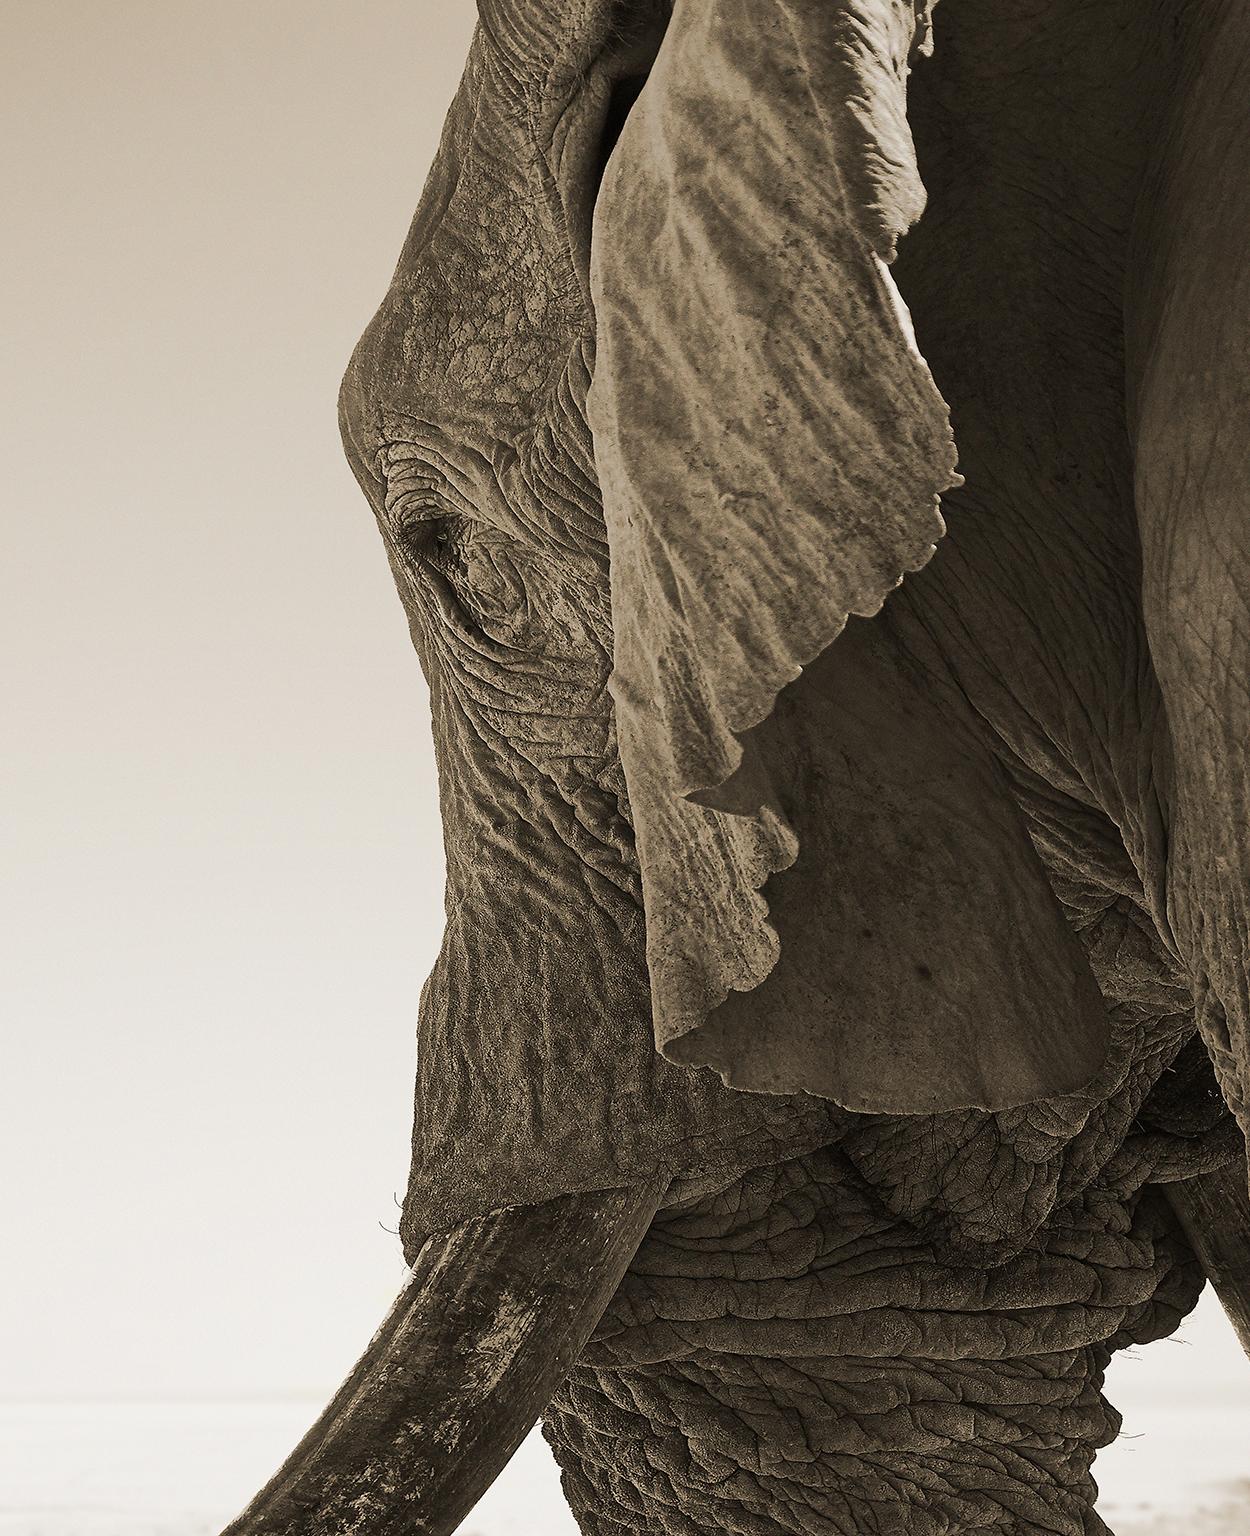 Elefant-02, Namibia – Photograph von Chris Gordaneer